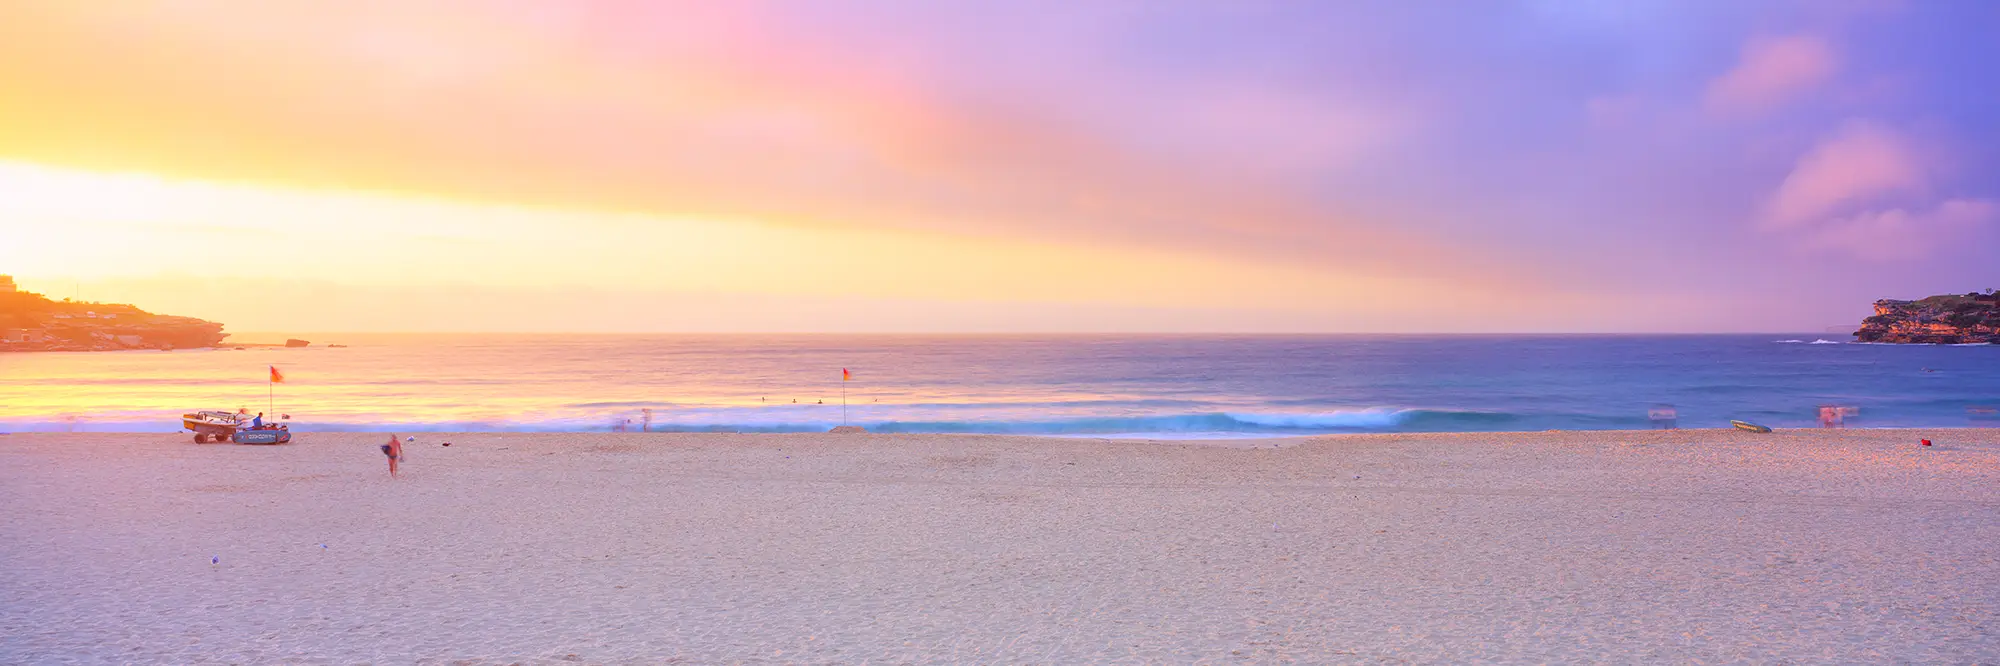 Bondi Beach Morning Sunrise Panoramic Image Fine Art